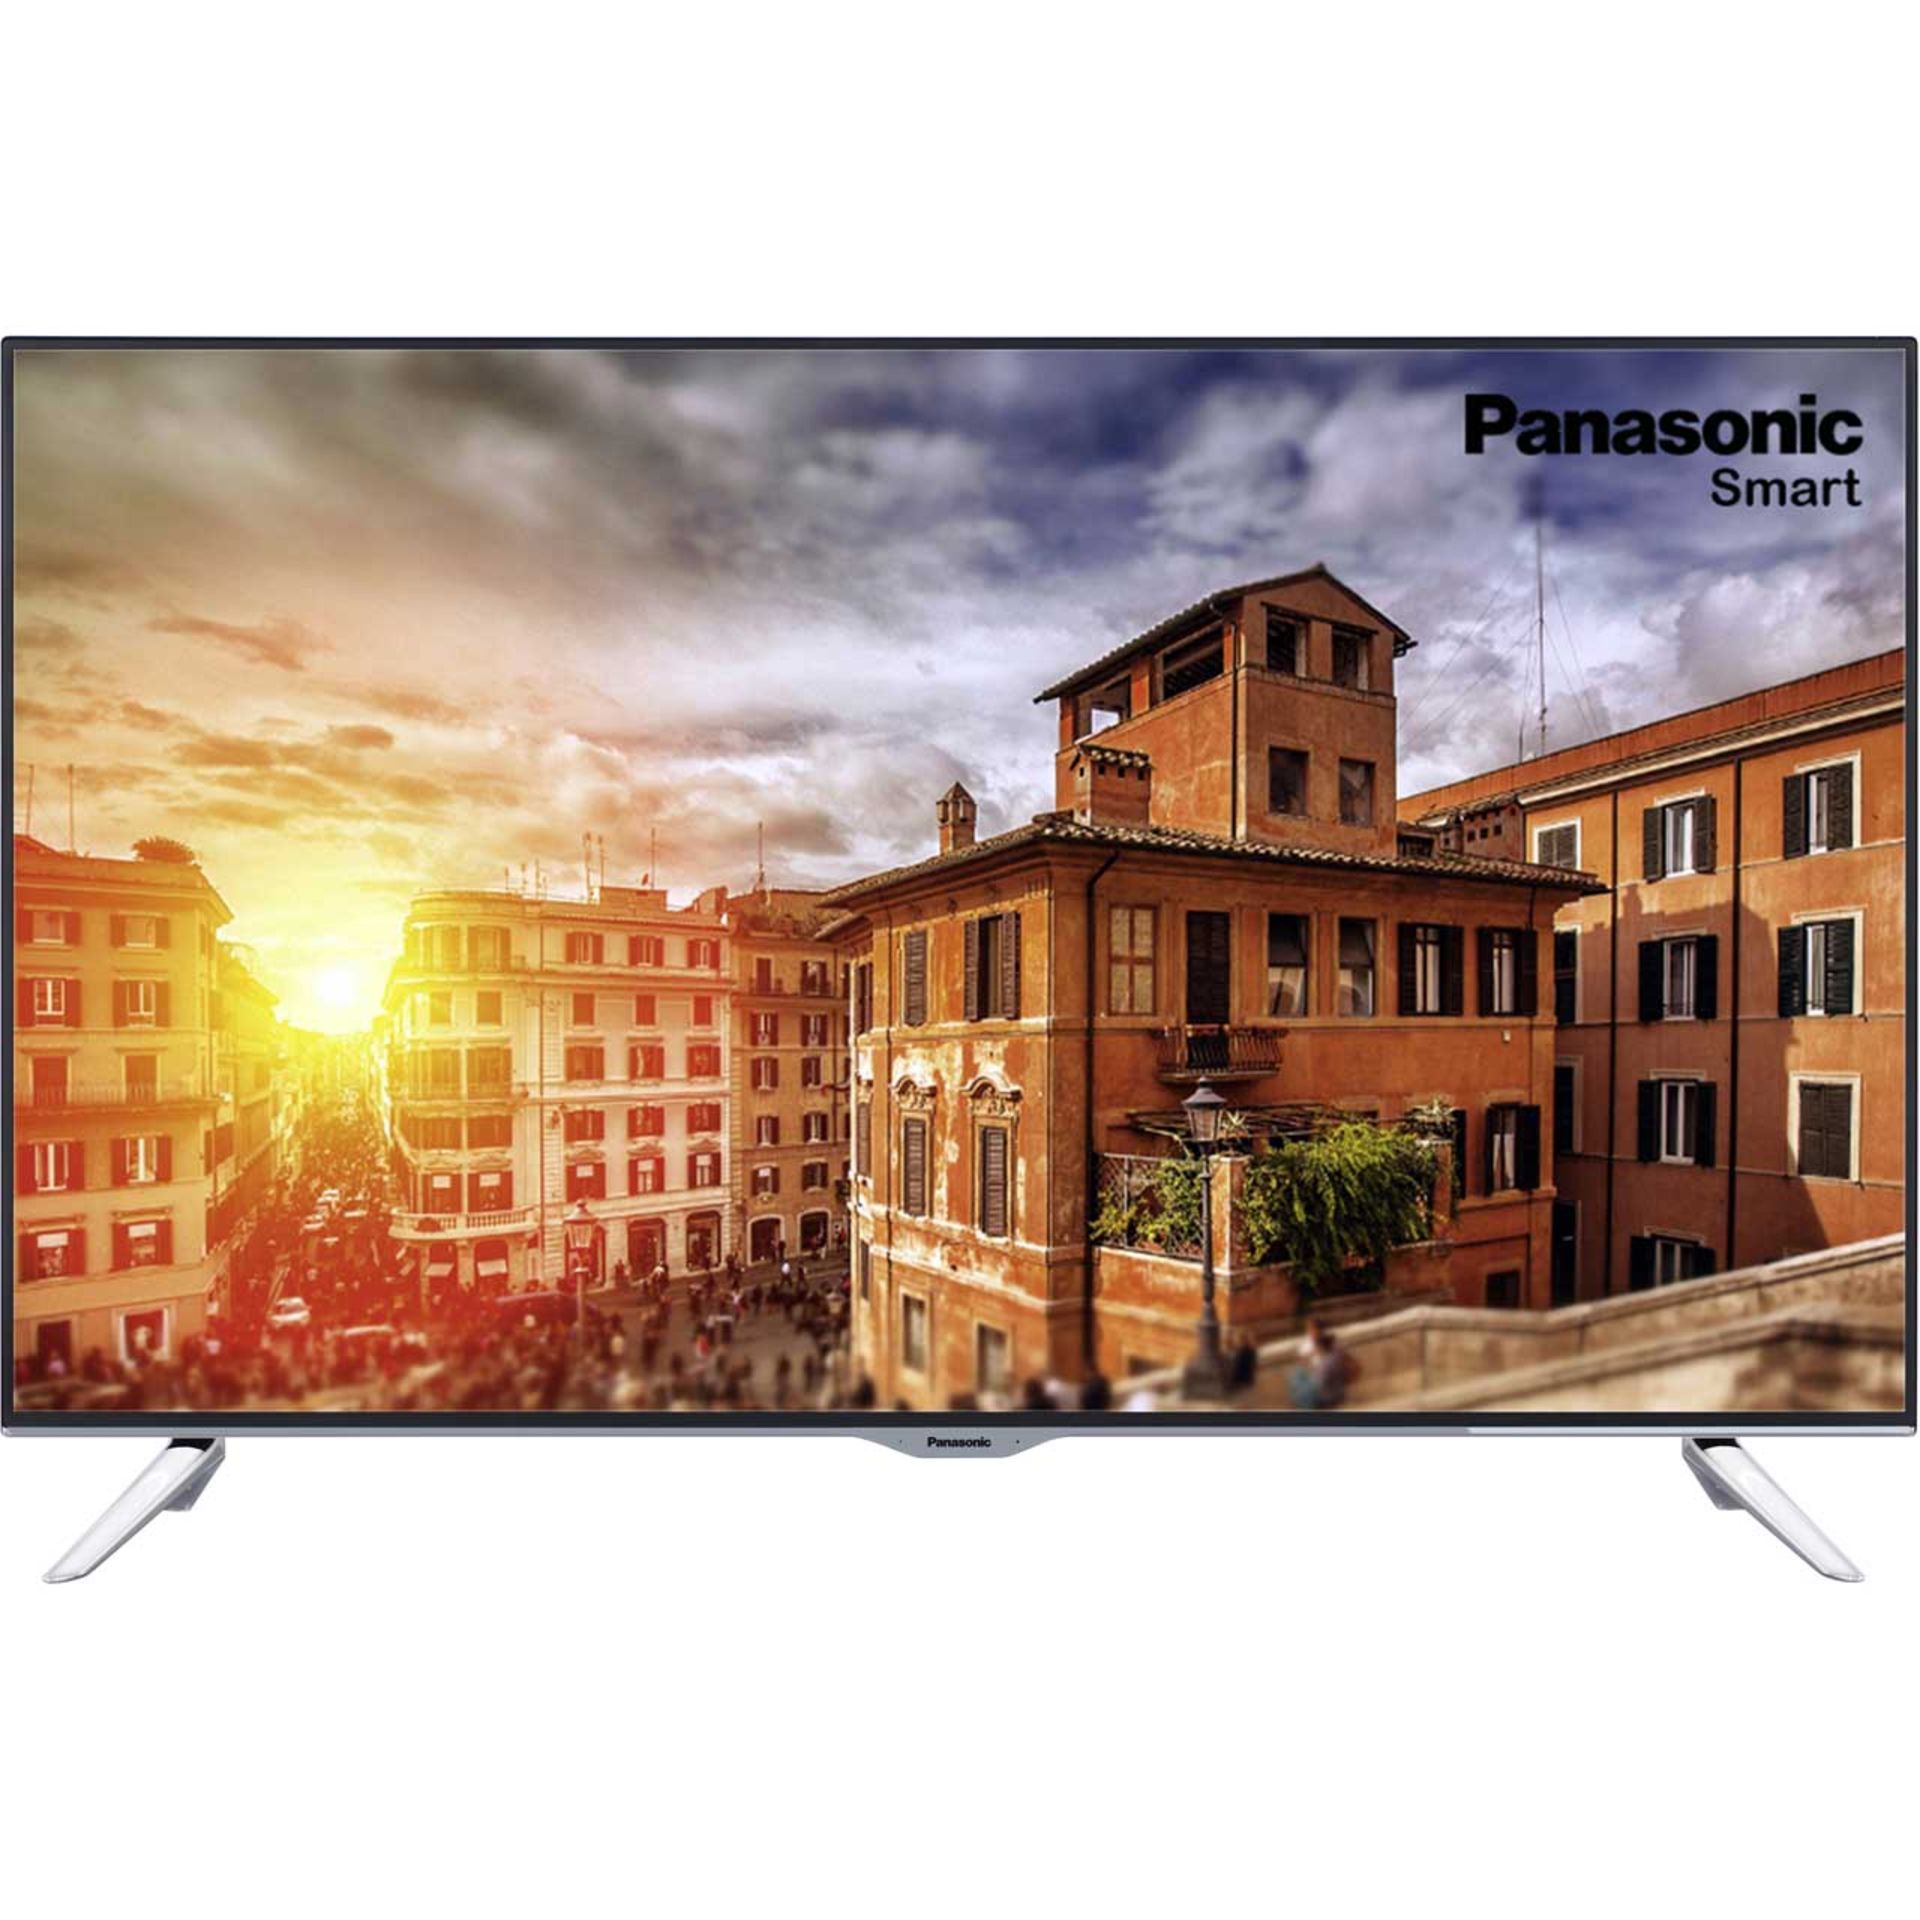 V Grade A Panasonic 48" Smart 4K Ultra HD TV - Freeview HD - Smart TV Including BBC iPlayer and